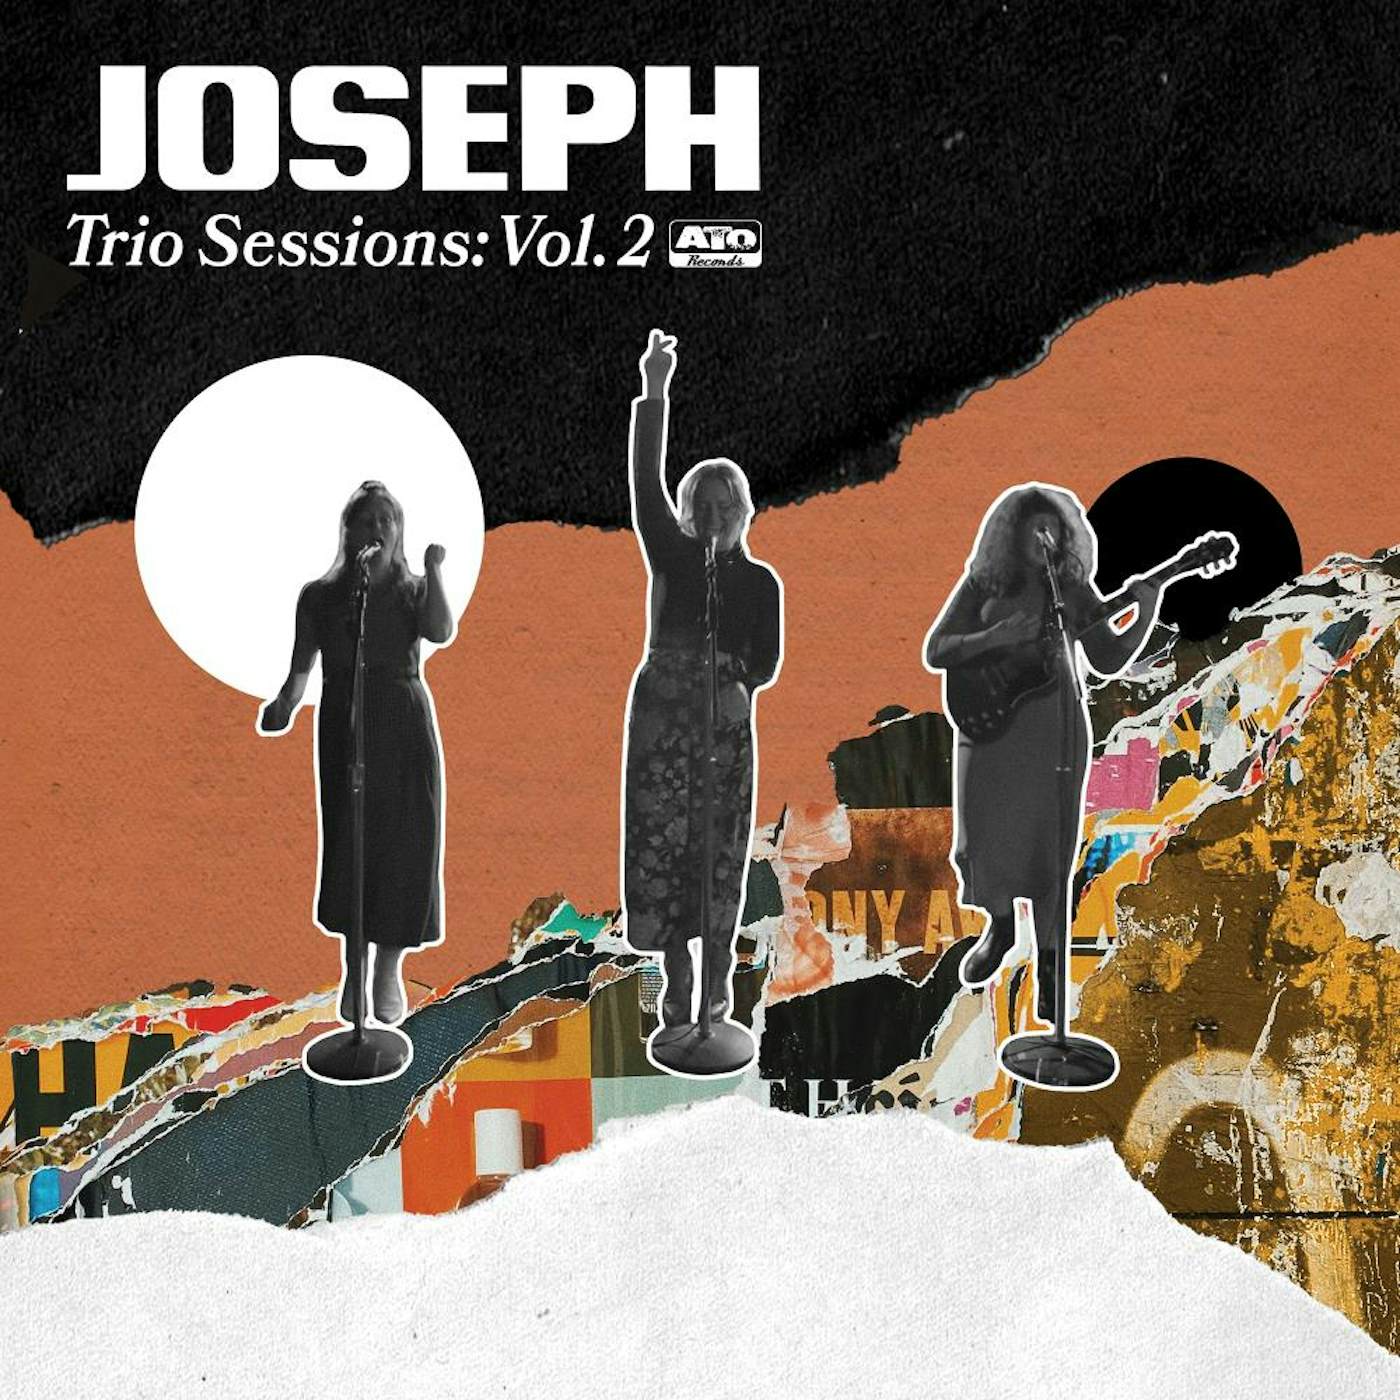 JOSEPH TRIO SESSIONS VOL 2 Vinyl Record